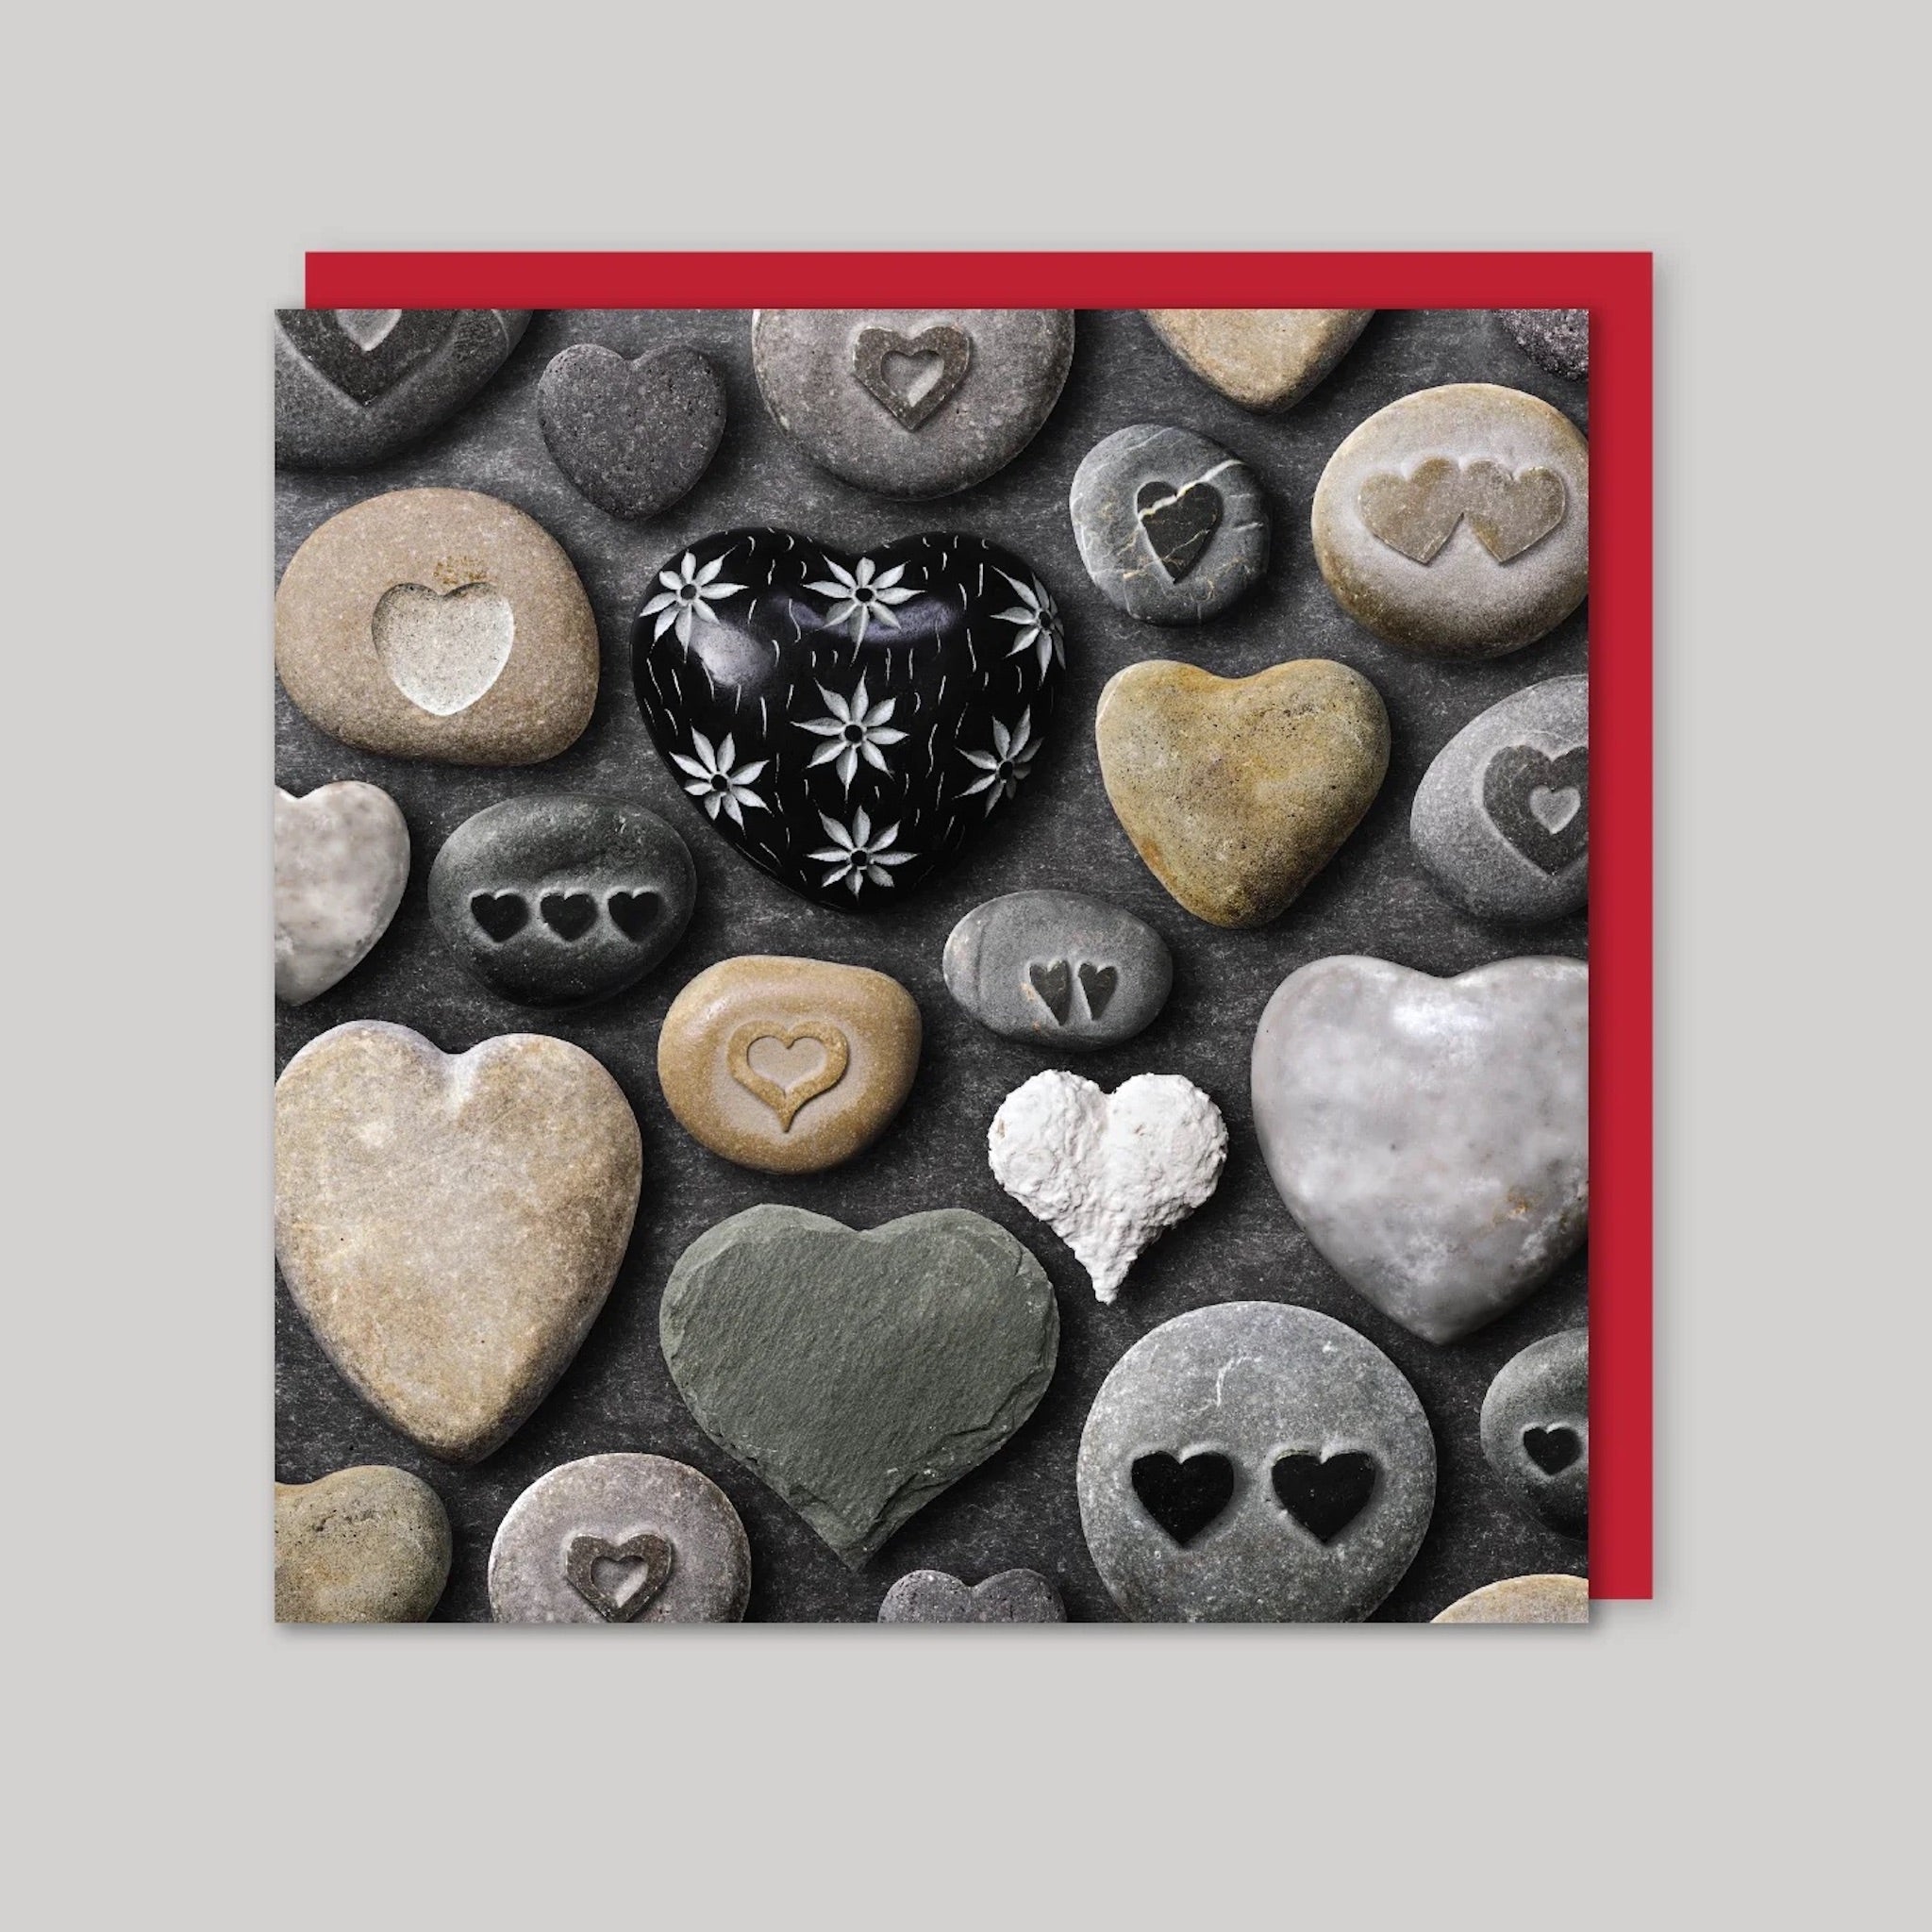 Love rocks